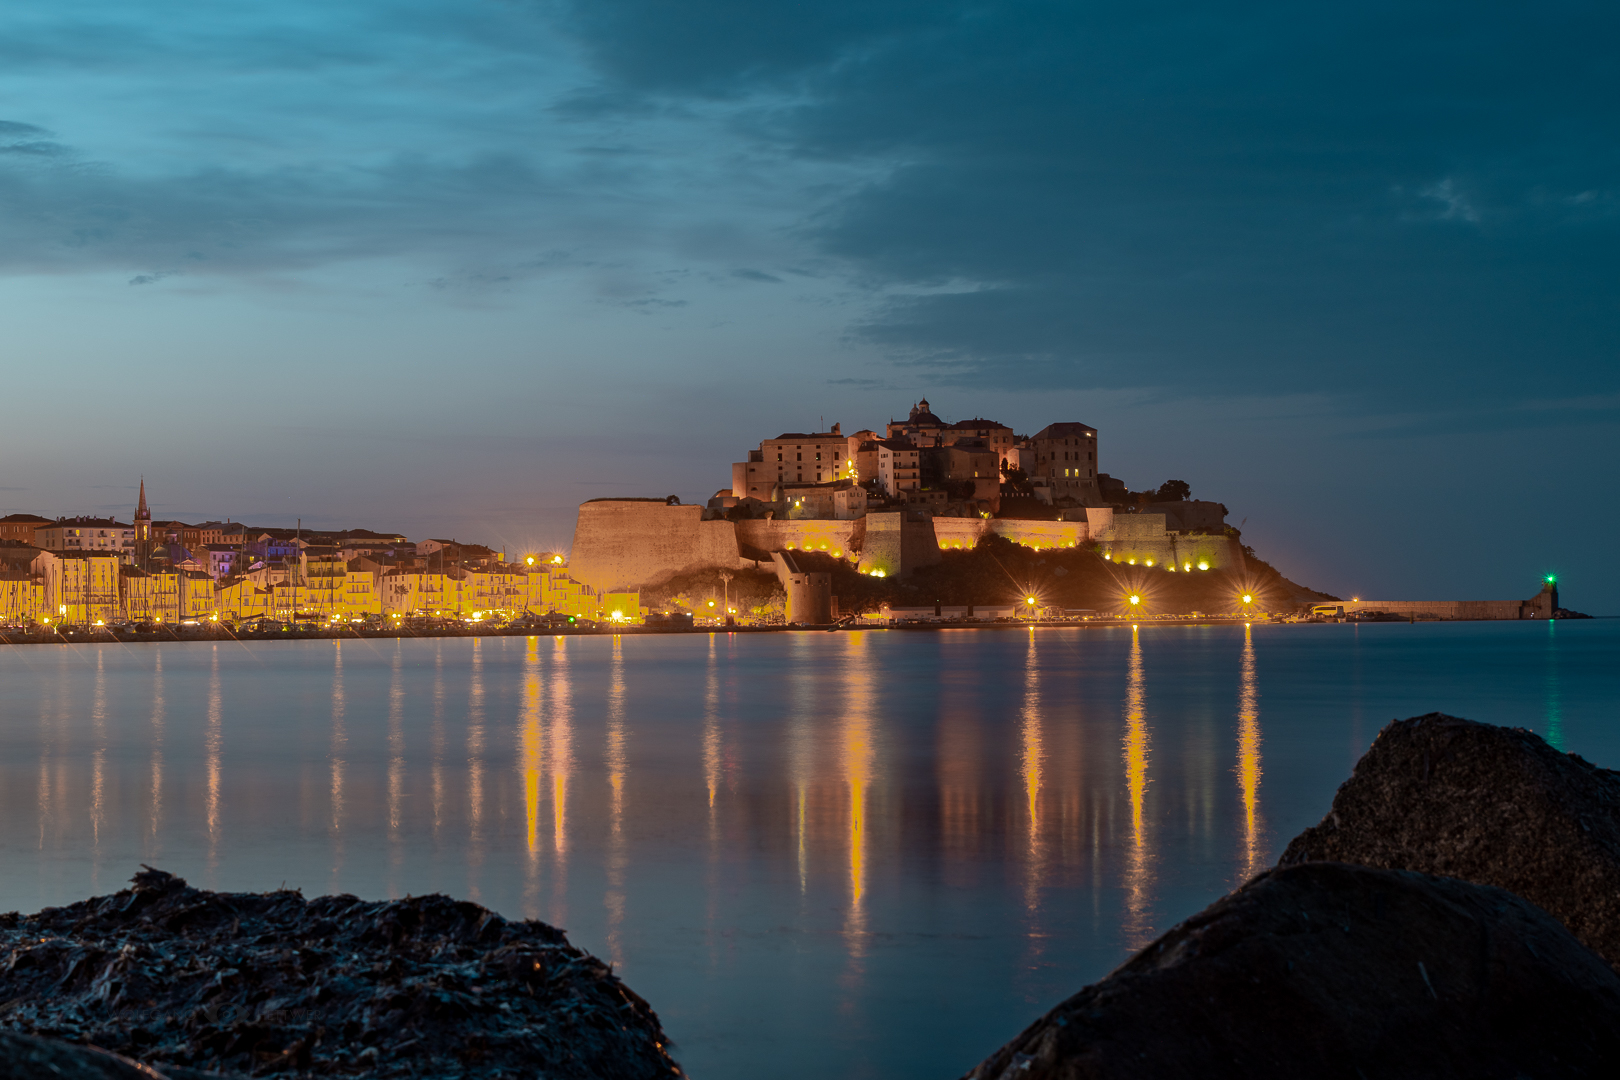 Zitadelle von Calvi (Korsika) - blaue Stunde